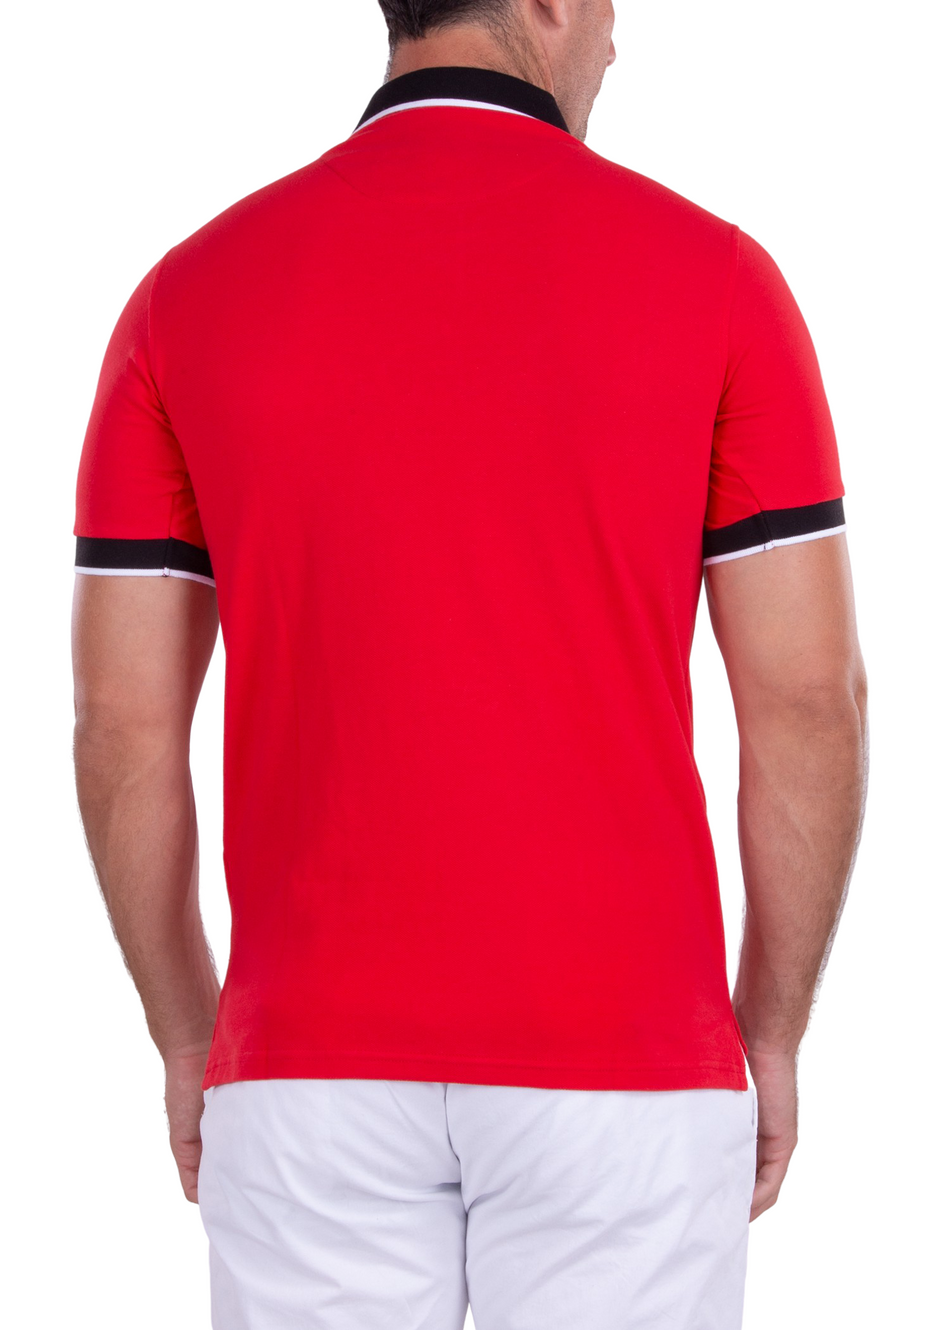 Men's Essentials Red Short Sleeve Polo Shirt